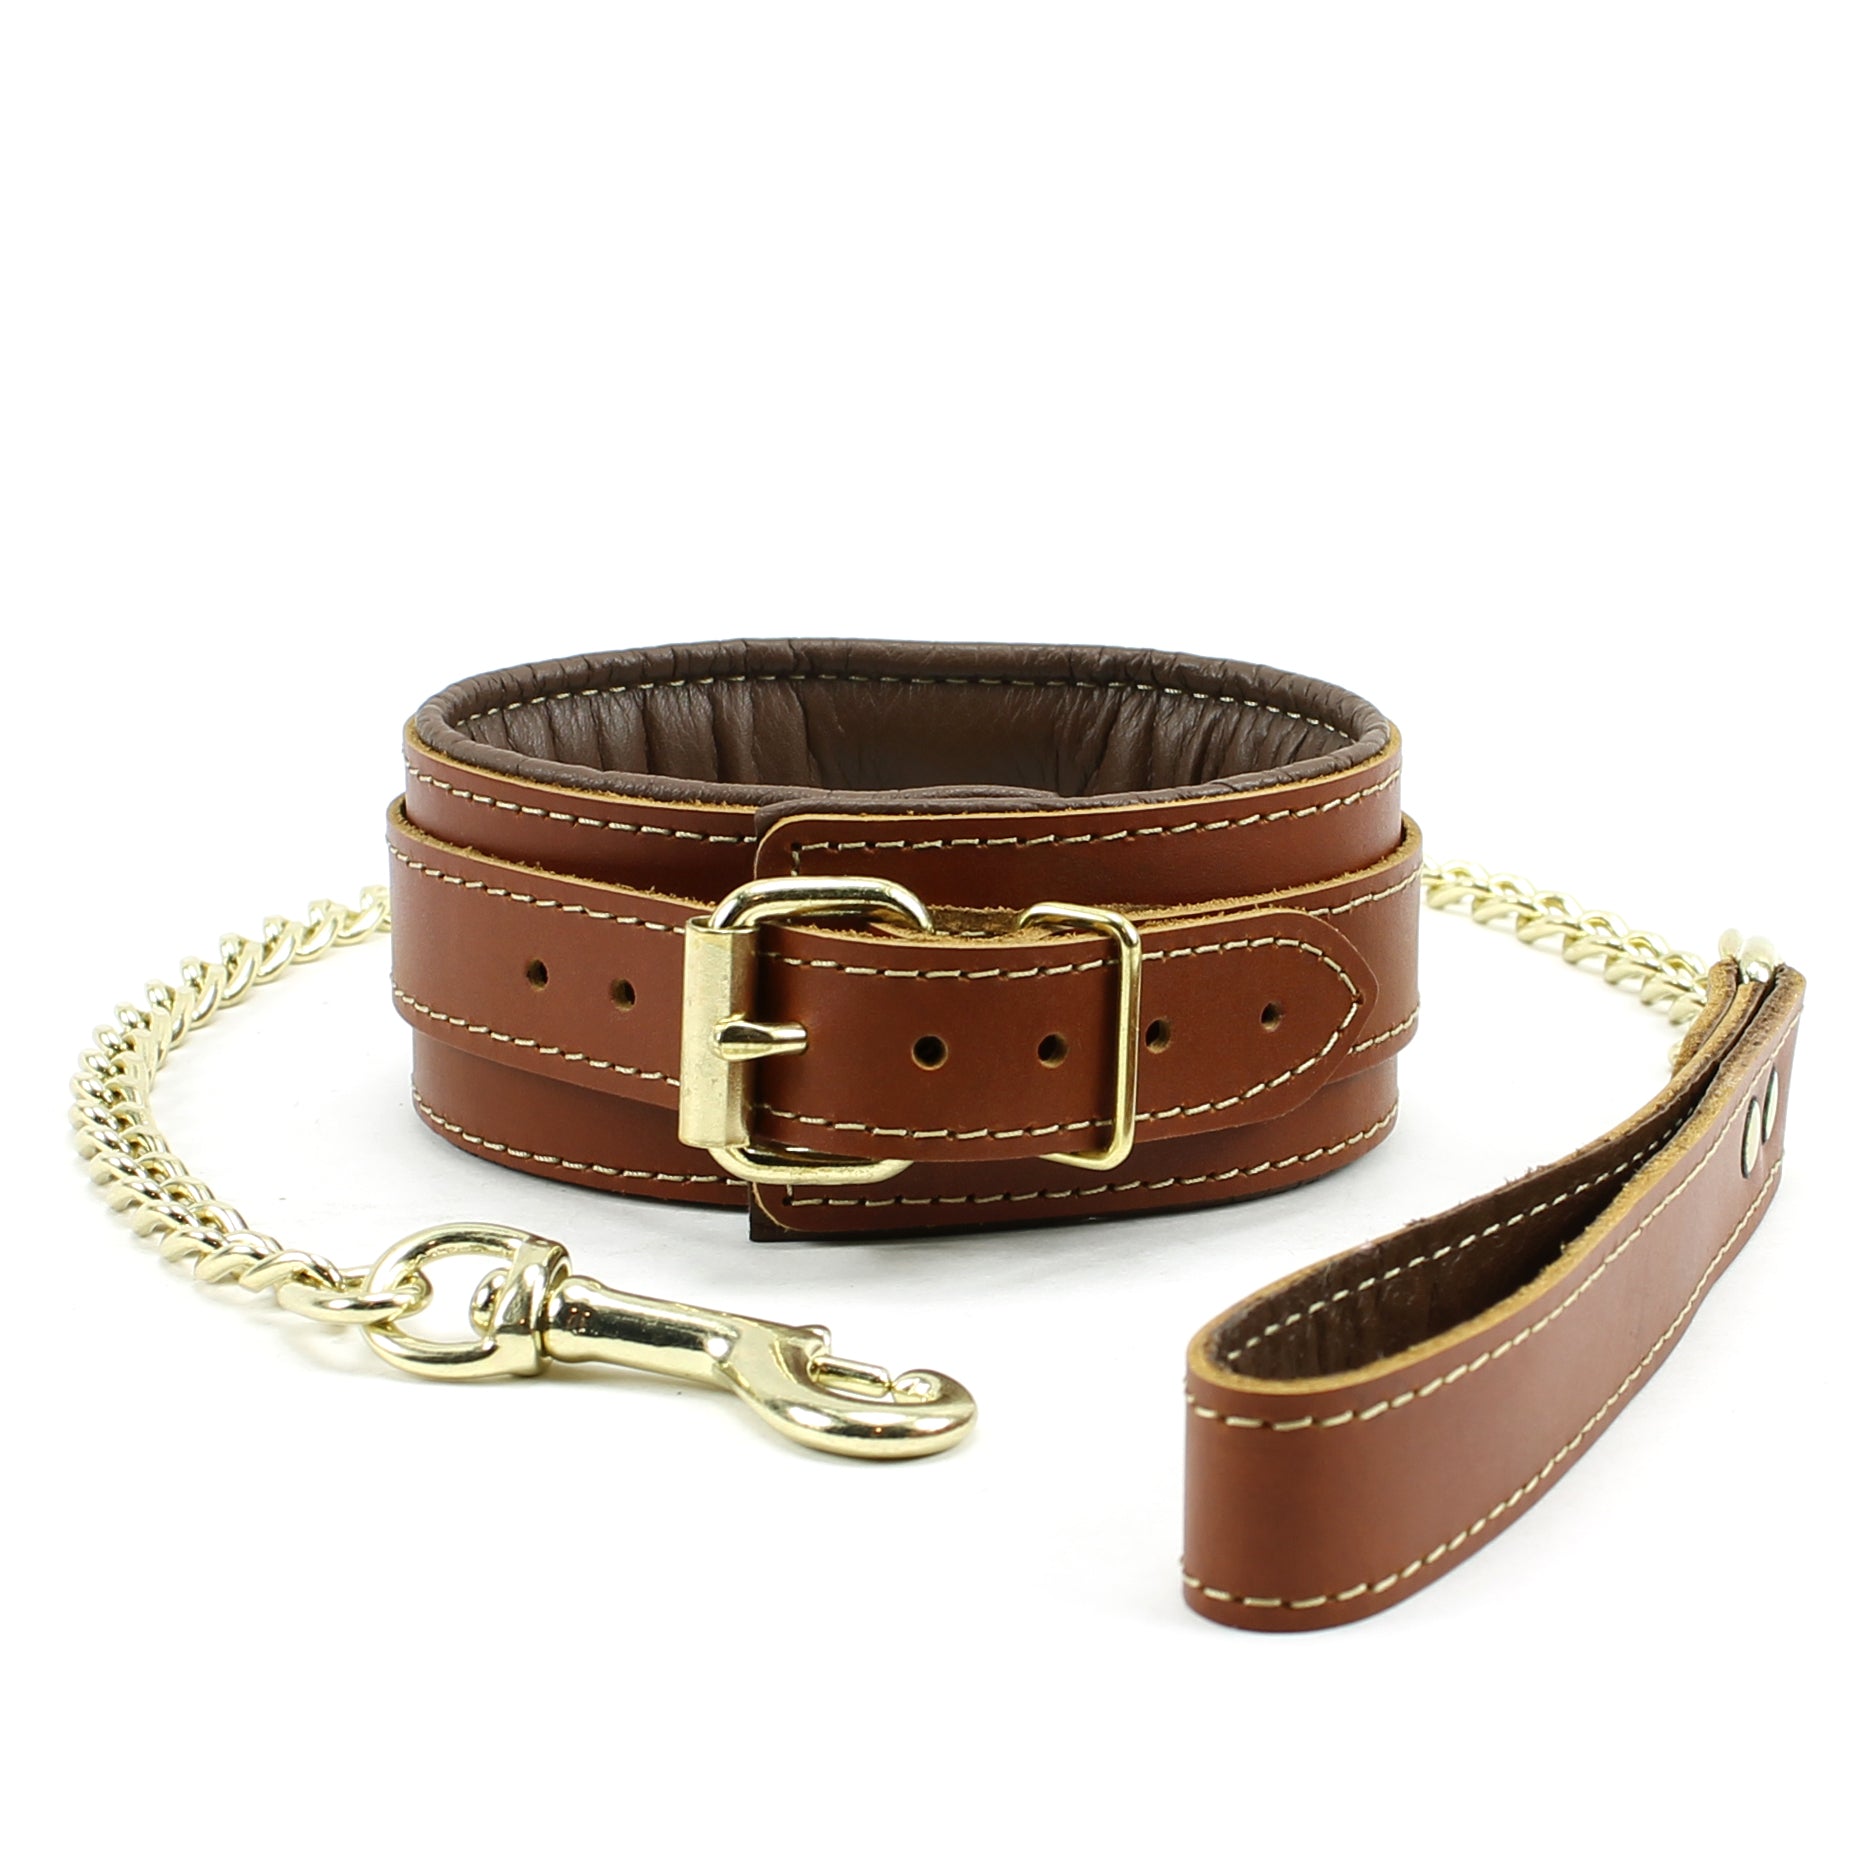 Finn Luxury BDSM Leather Collar and Leash